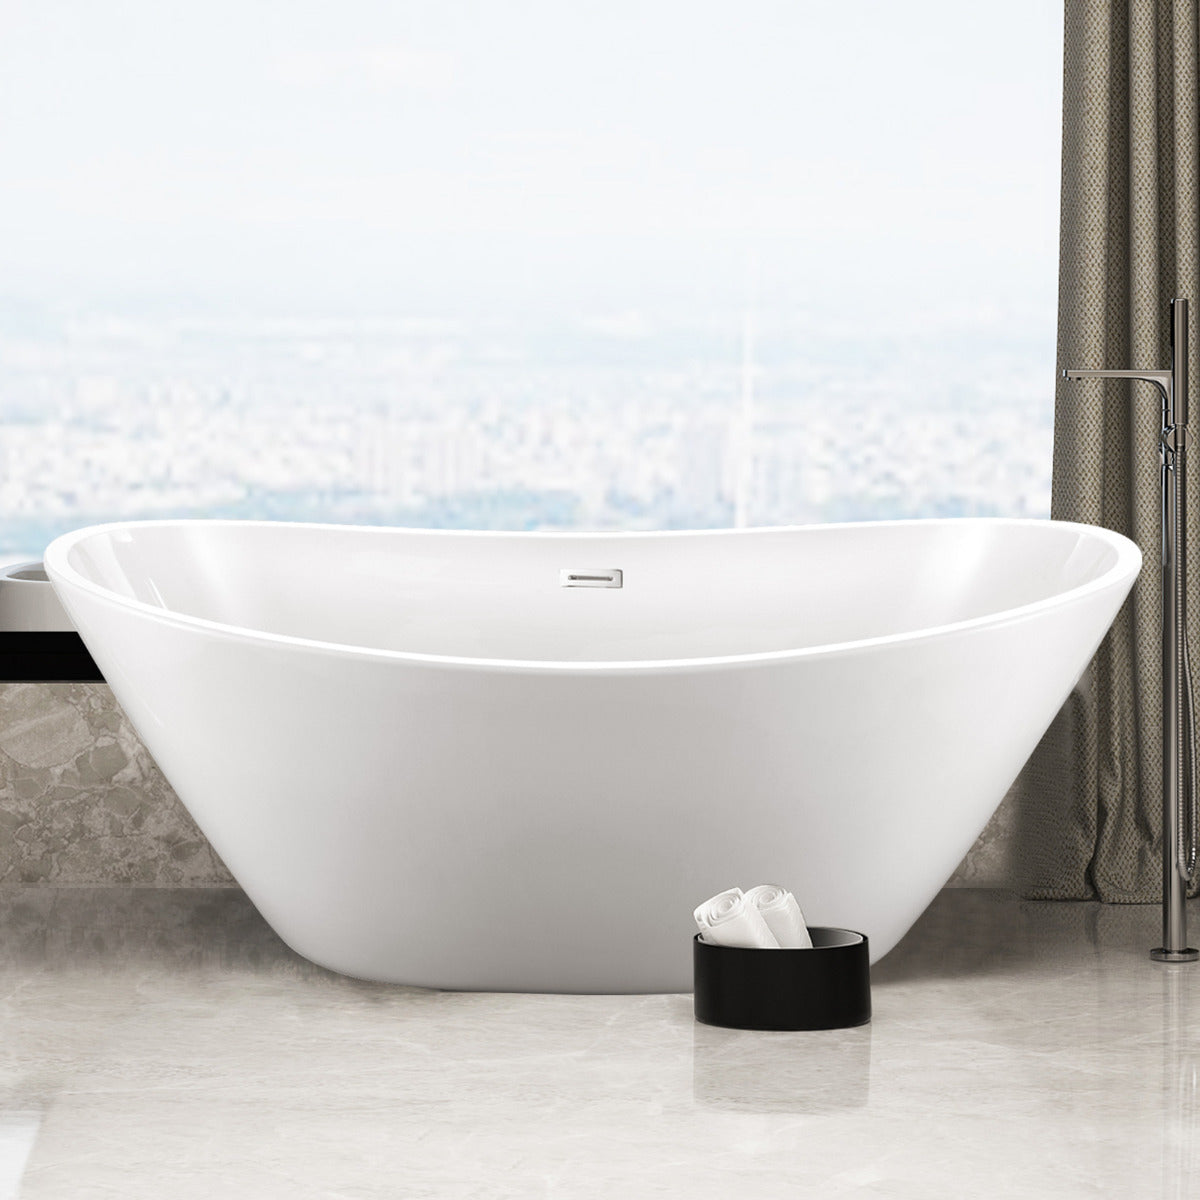 JassferryJASSFERRY 1700x785 mm Acrylic Modern Design Freestanding Bathtub Luxury Double EndedBathtubs